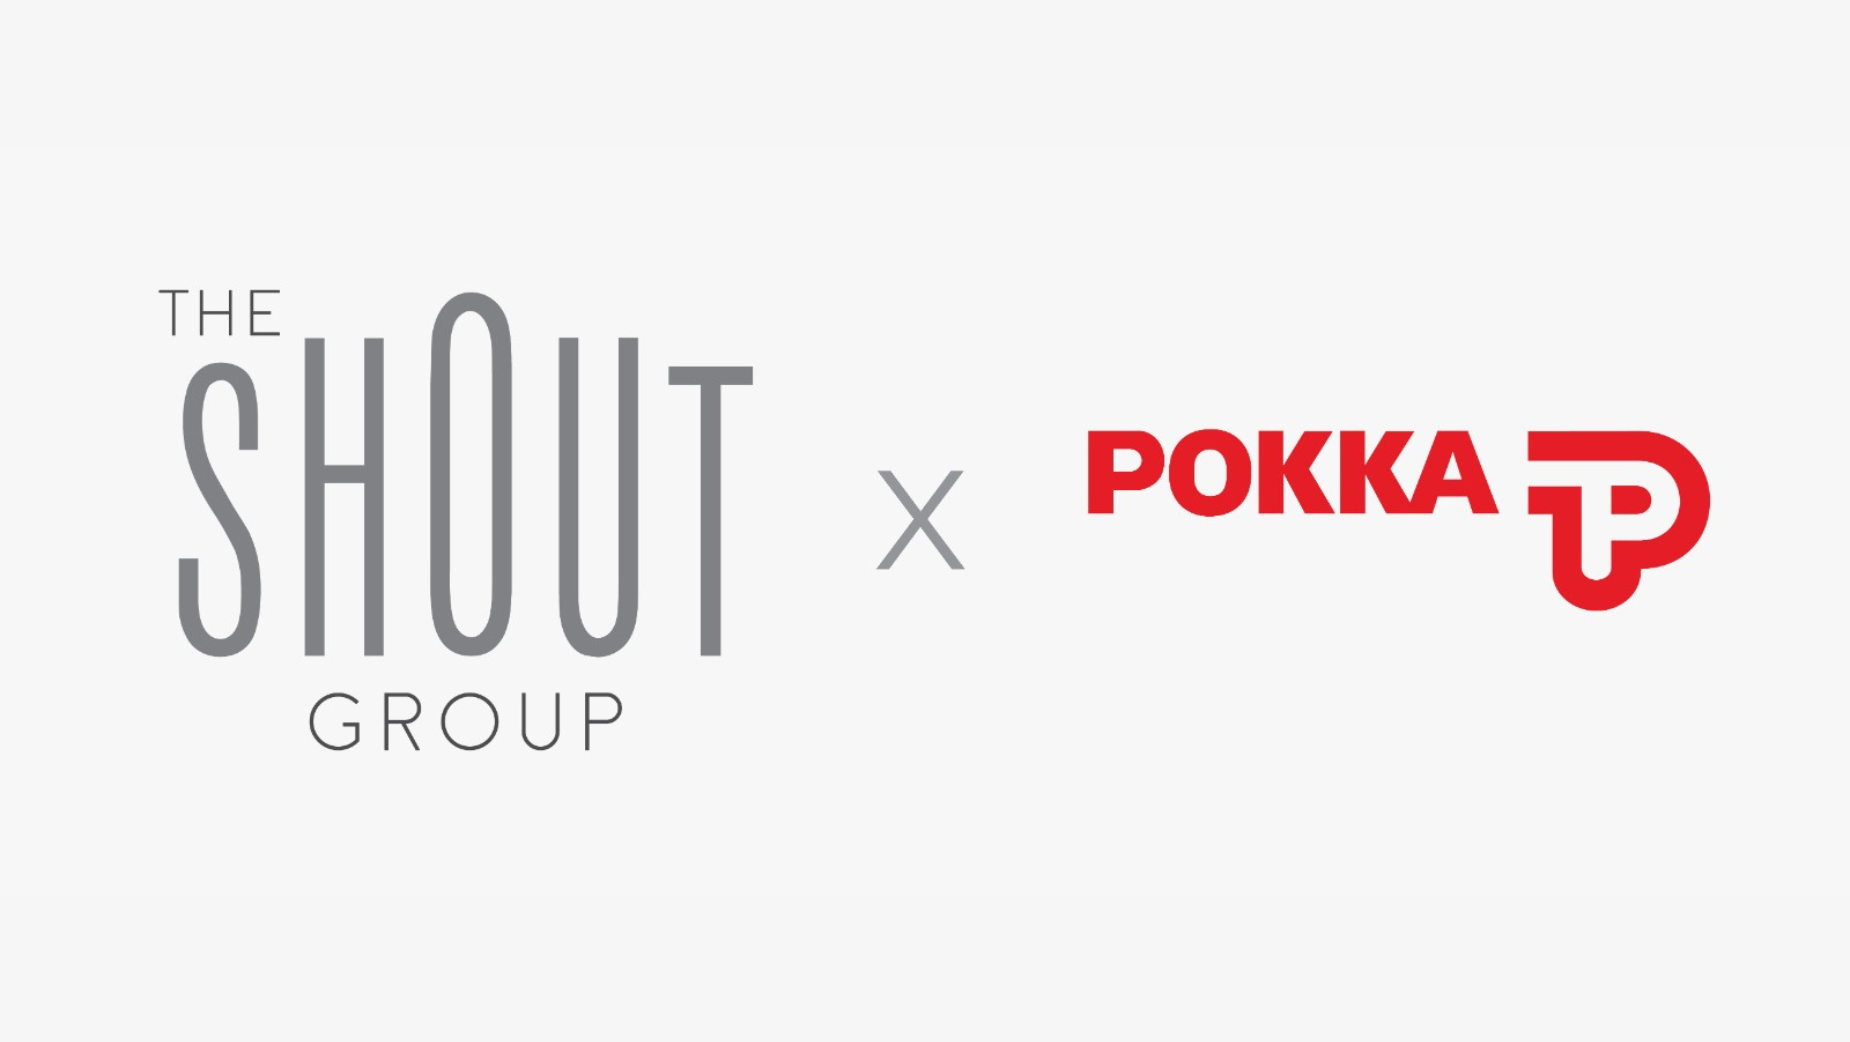 Pokka 任命 Shout Group 负责新加坡和马来西亚的创意工作